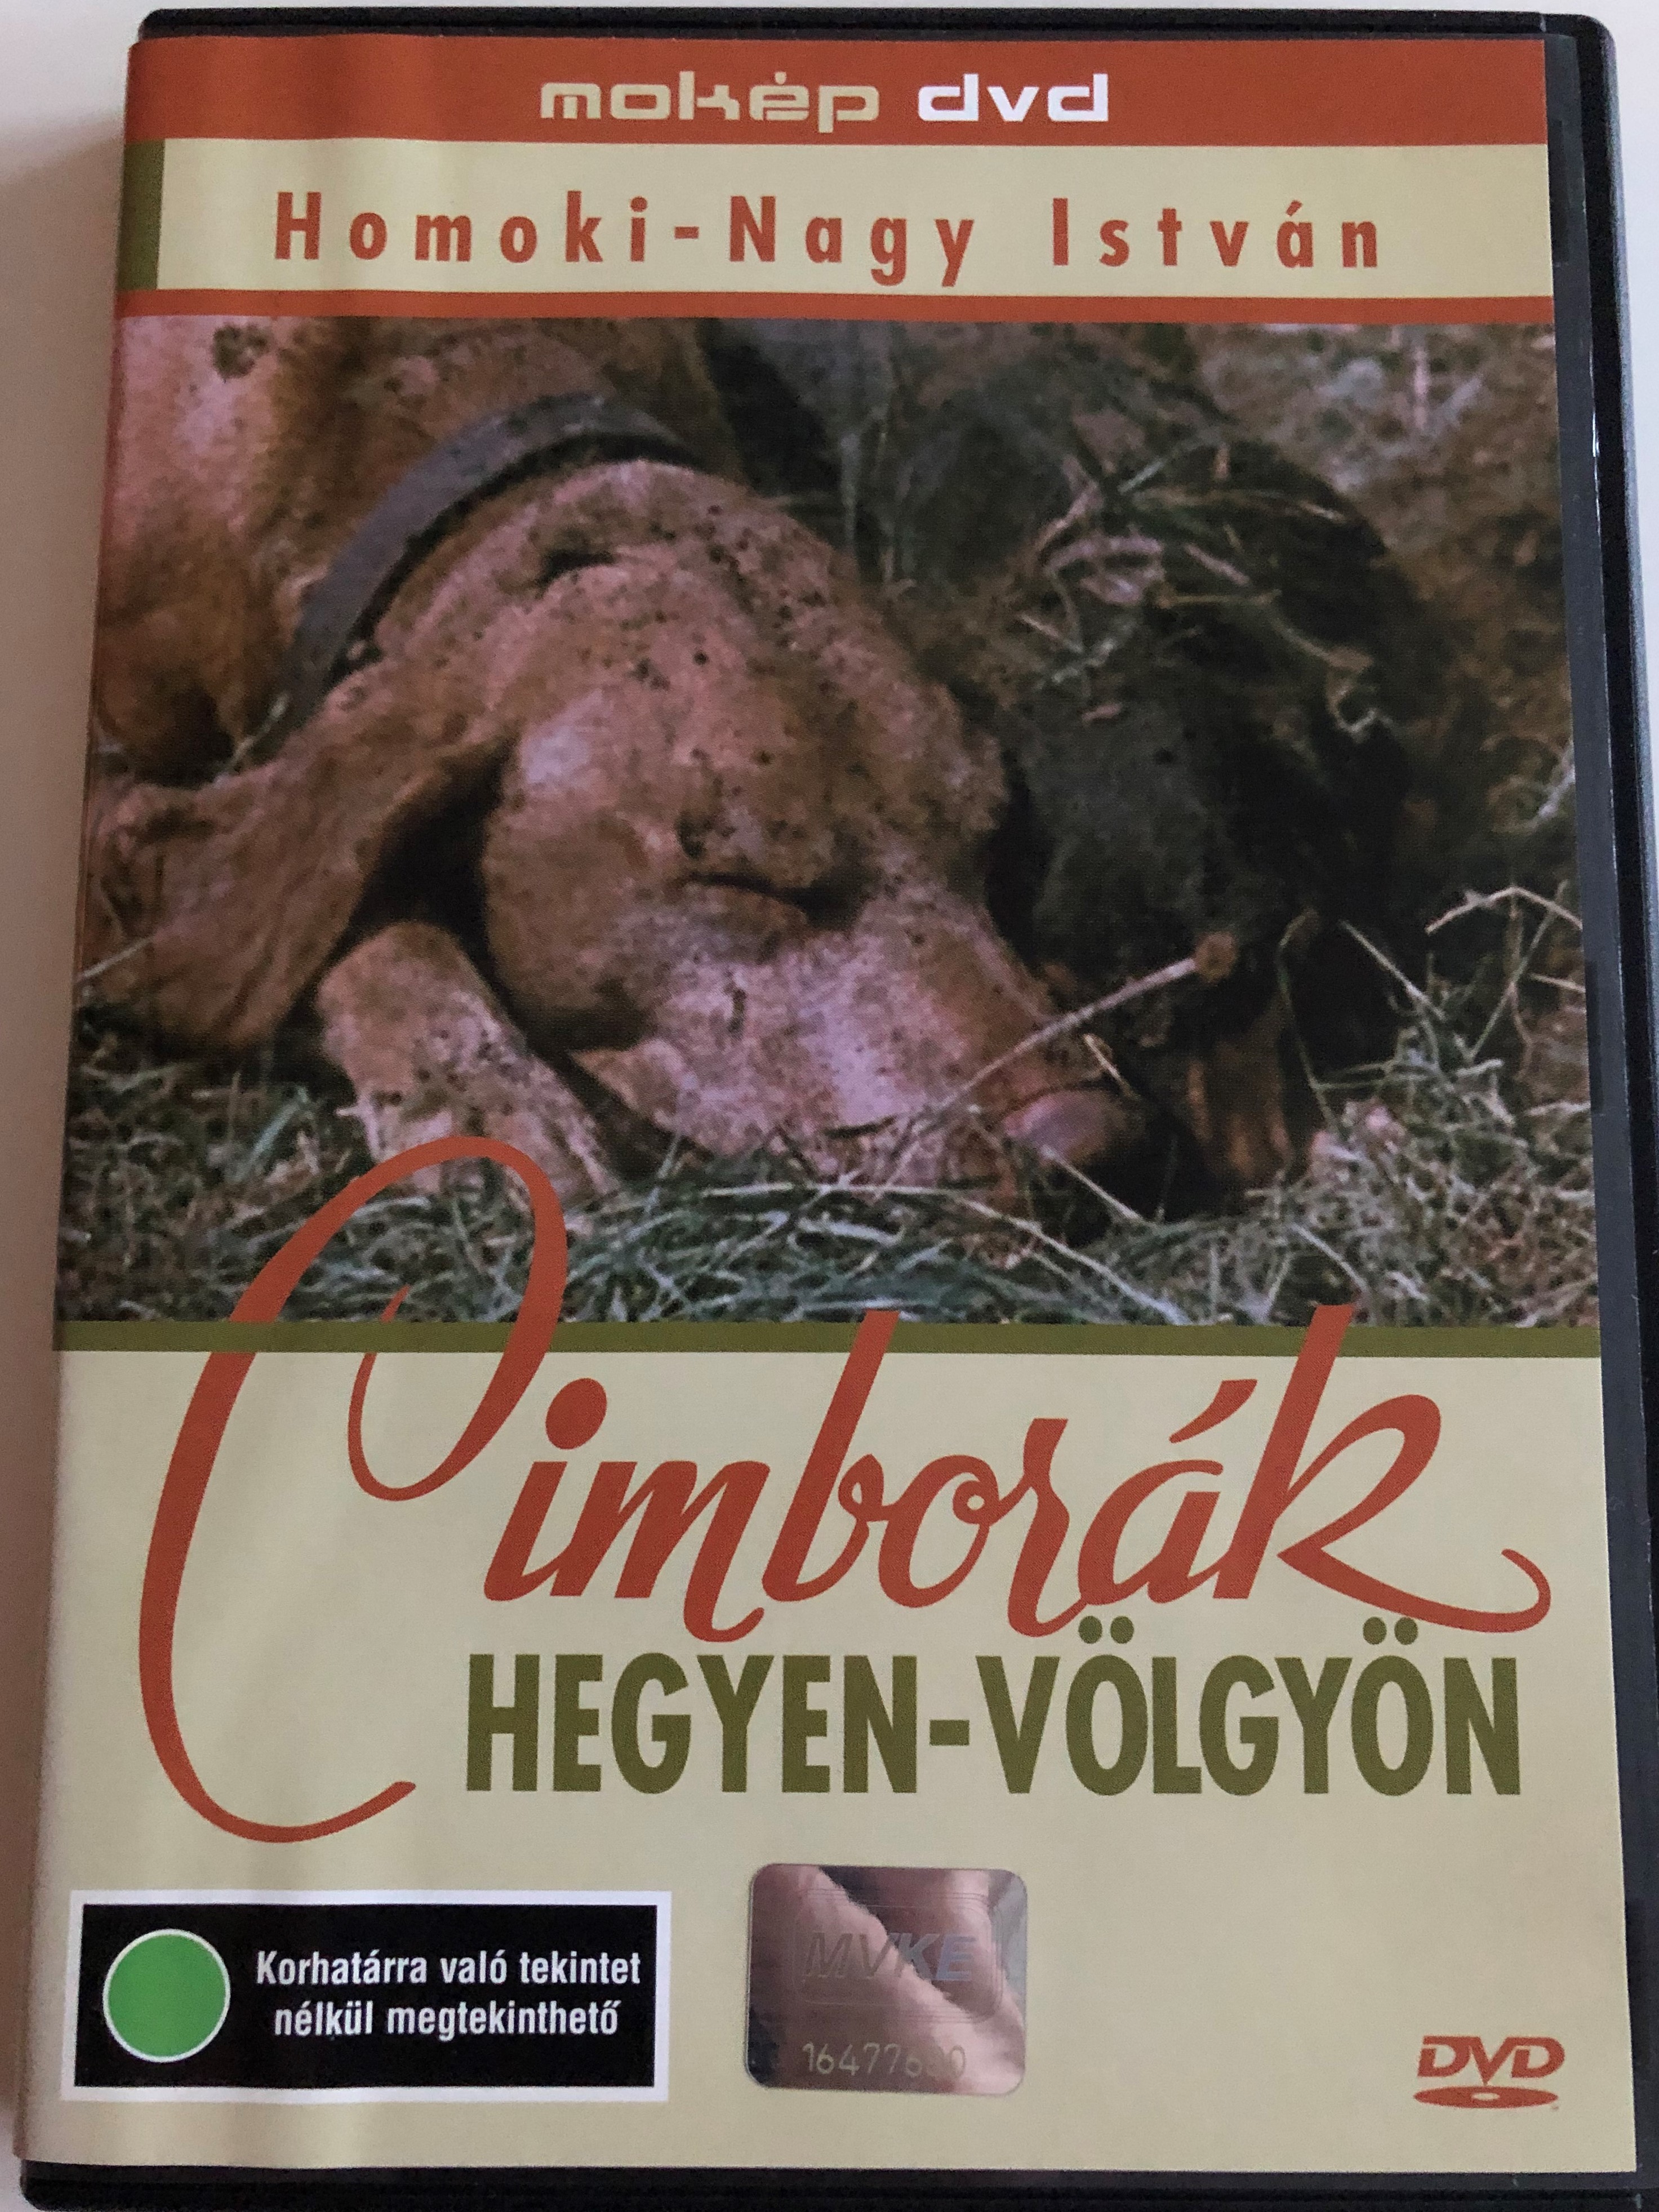 cimbor-k-hegyen-v-lgy-n-dvd-directed-by-homoki-nagy-istv-n-magyar-term-szetfilm-1-.jpg